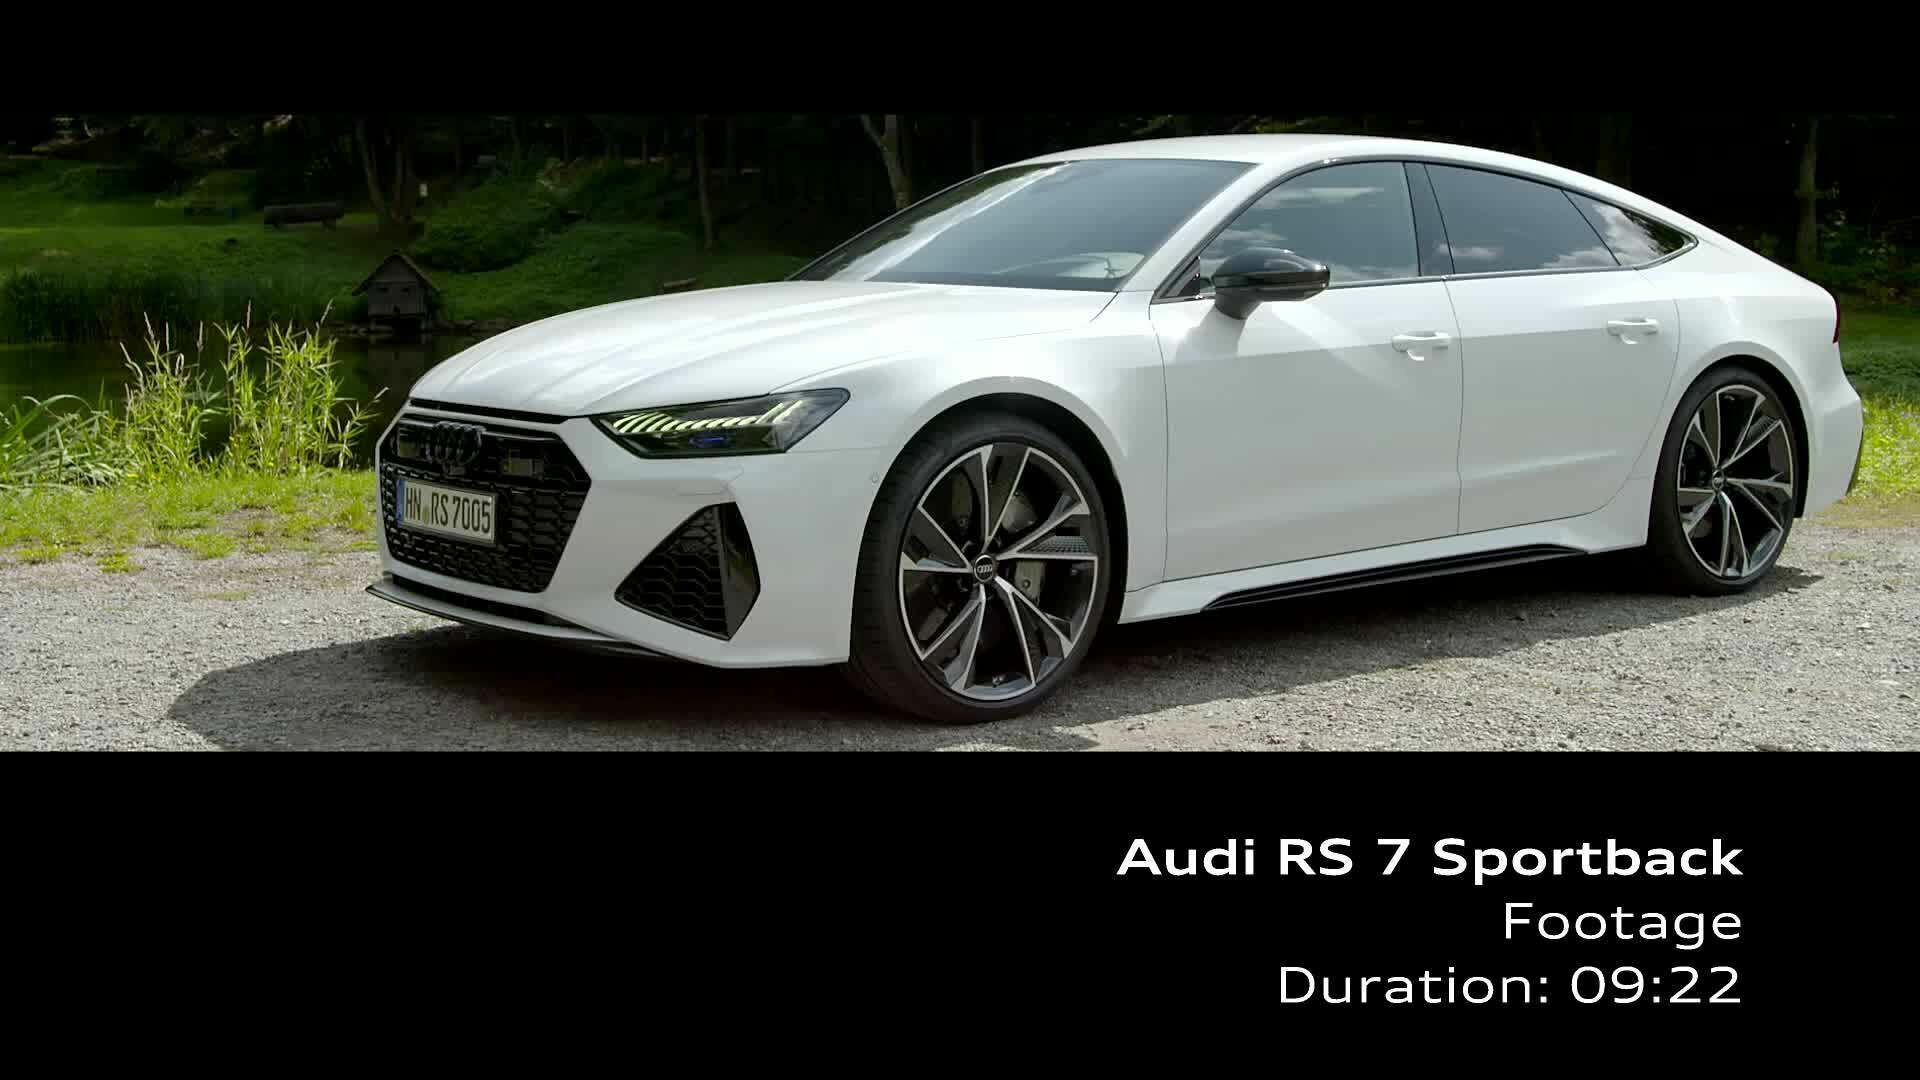 Audi RS 7 Sportback Glacier white (Footage)